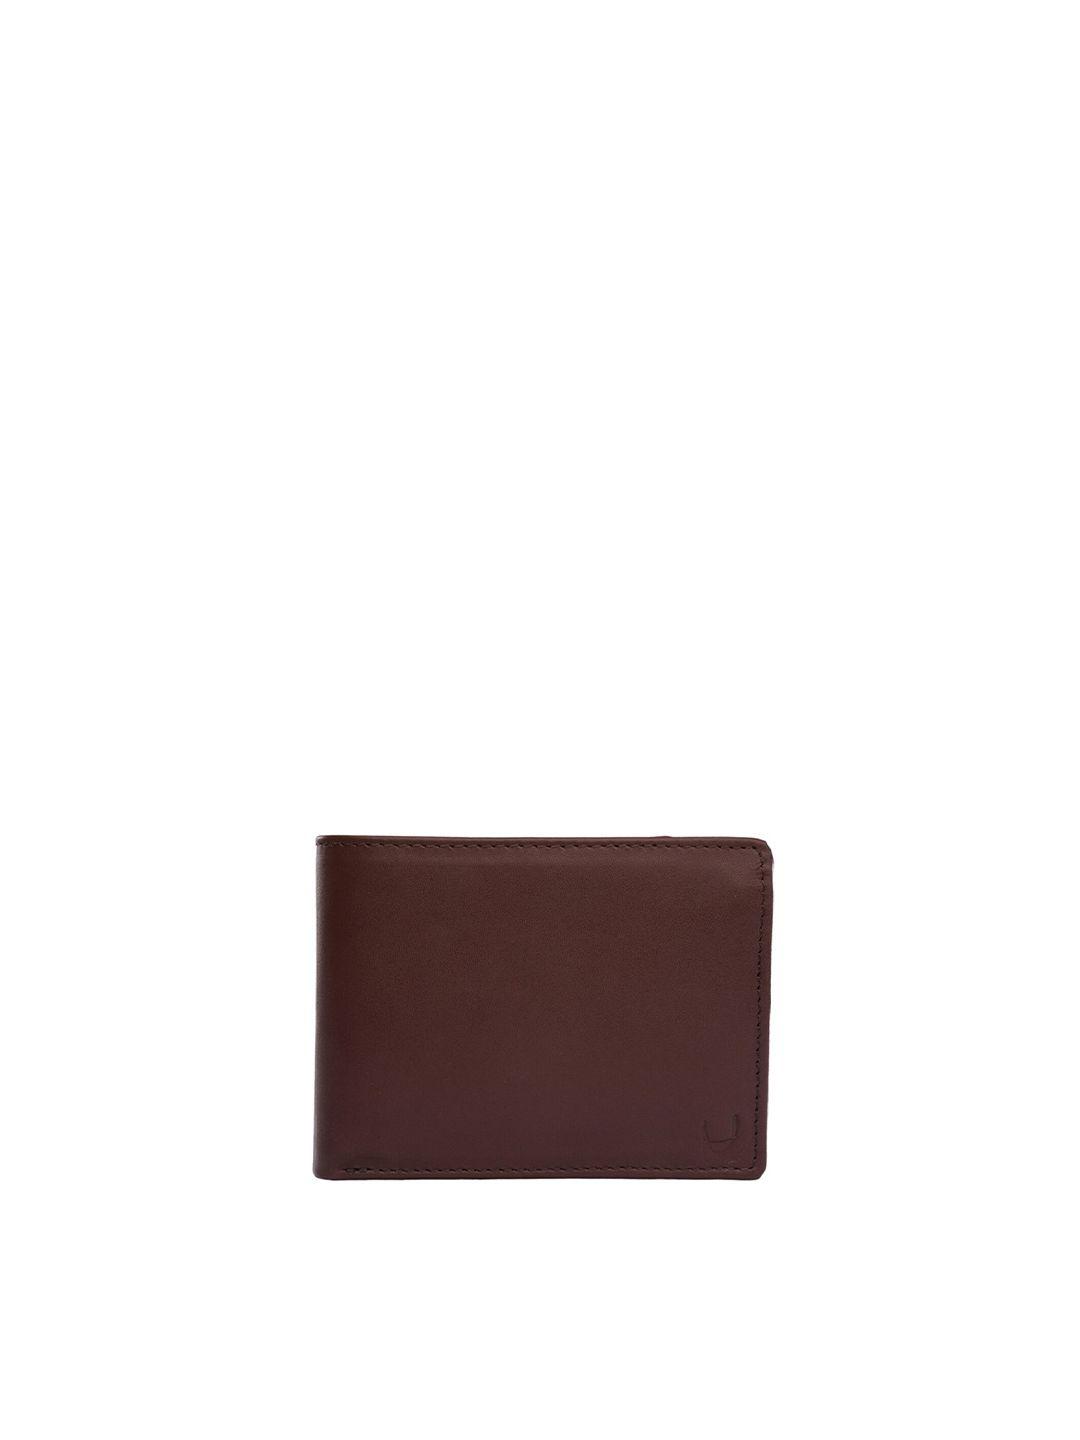 hidesign men tan leather two fold wallet